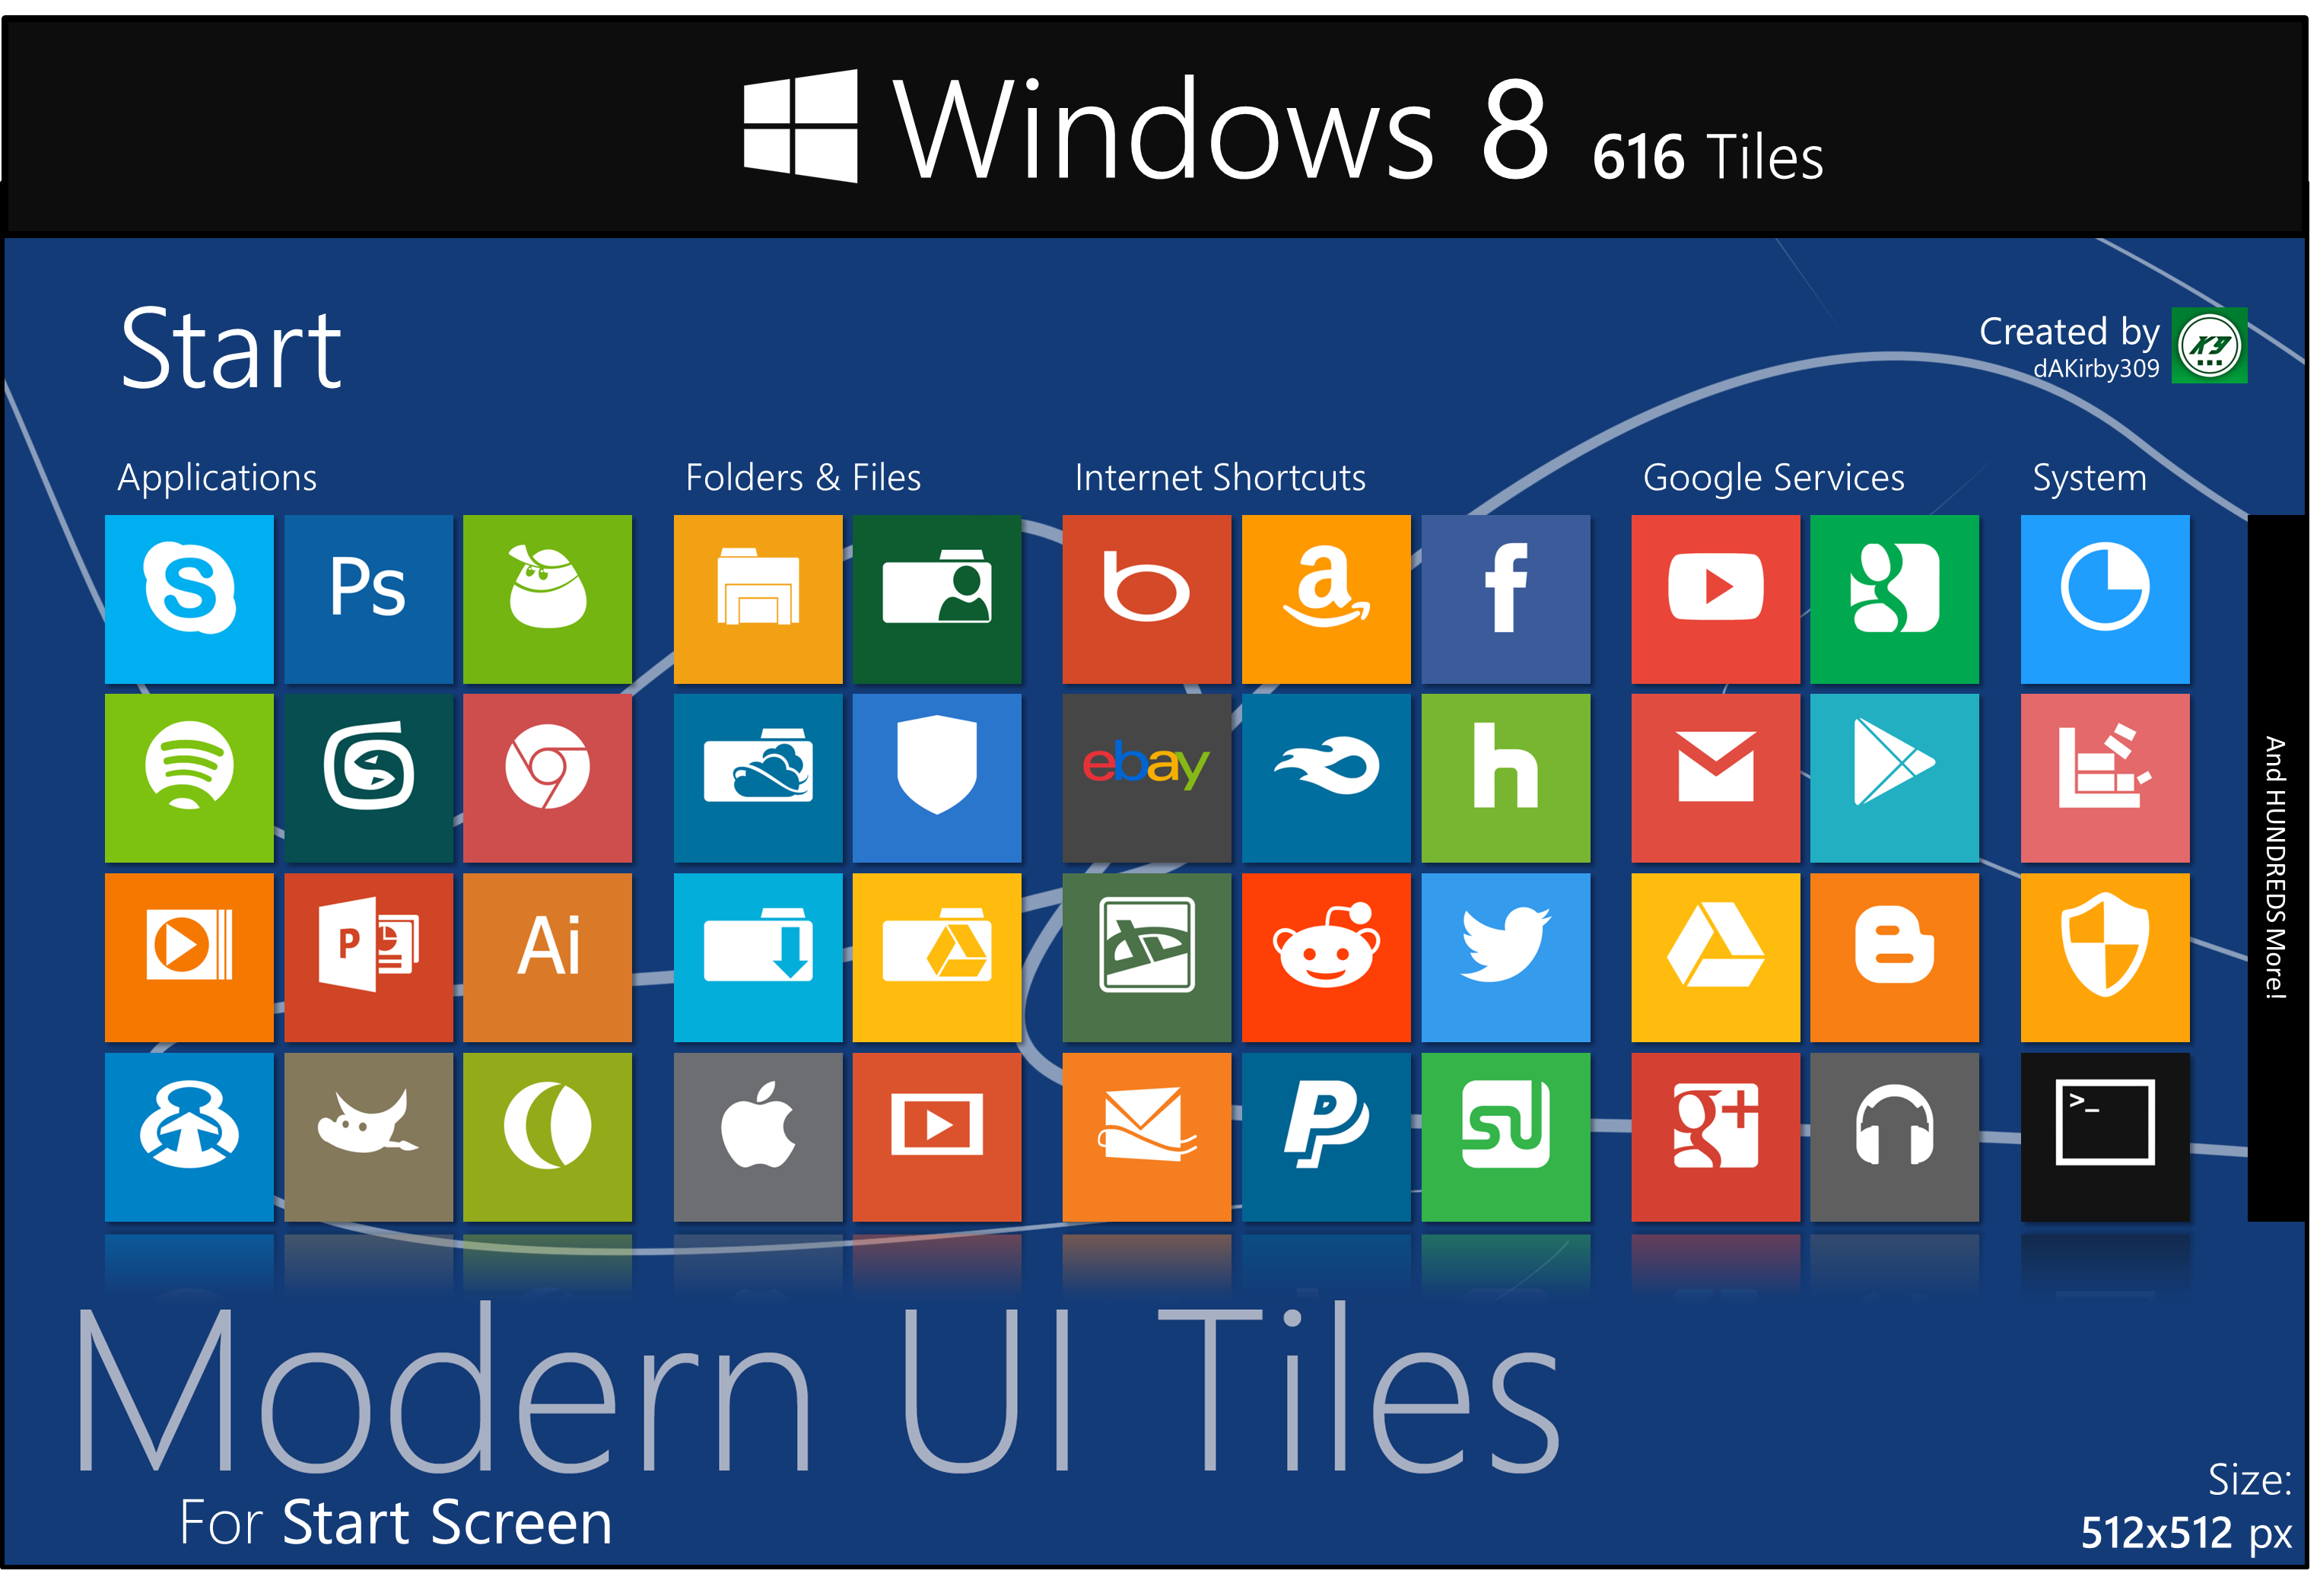 17 Win 8 Icon Sets Images - Custom Windows 8 Tile Icons, Windows 8 